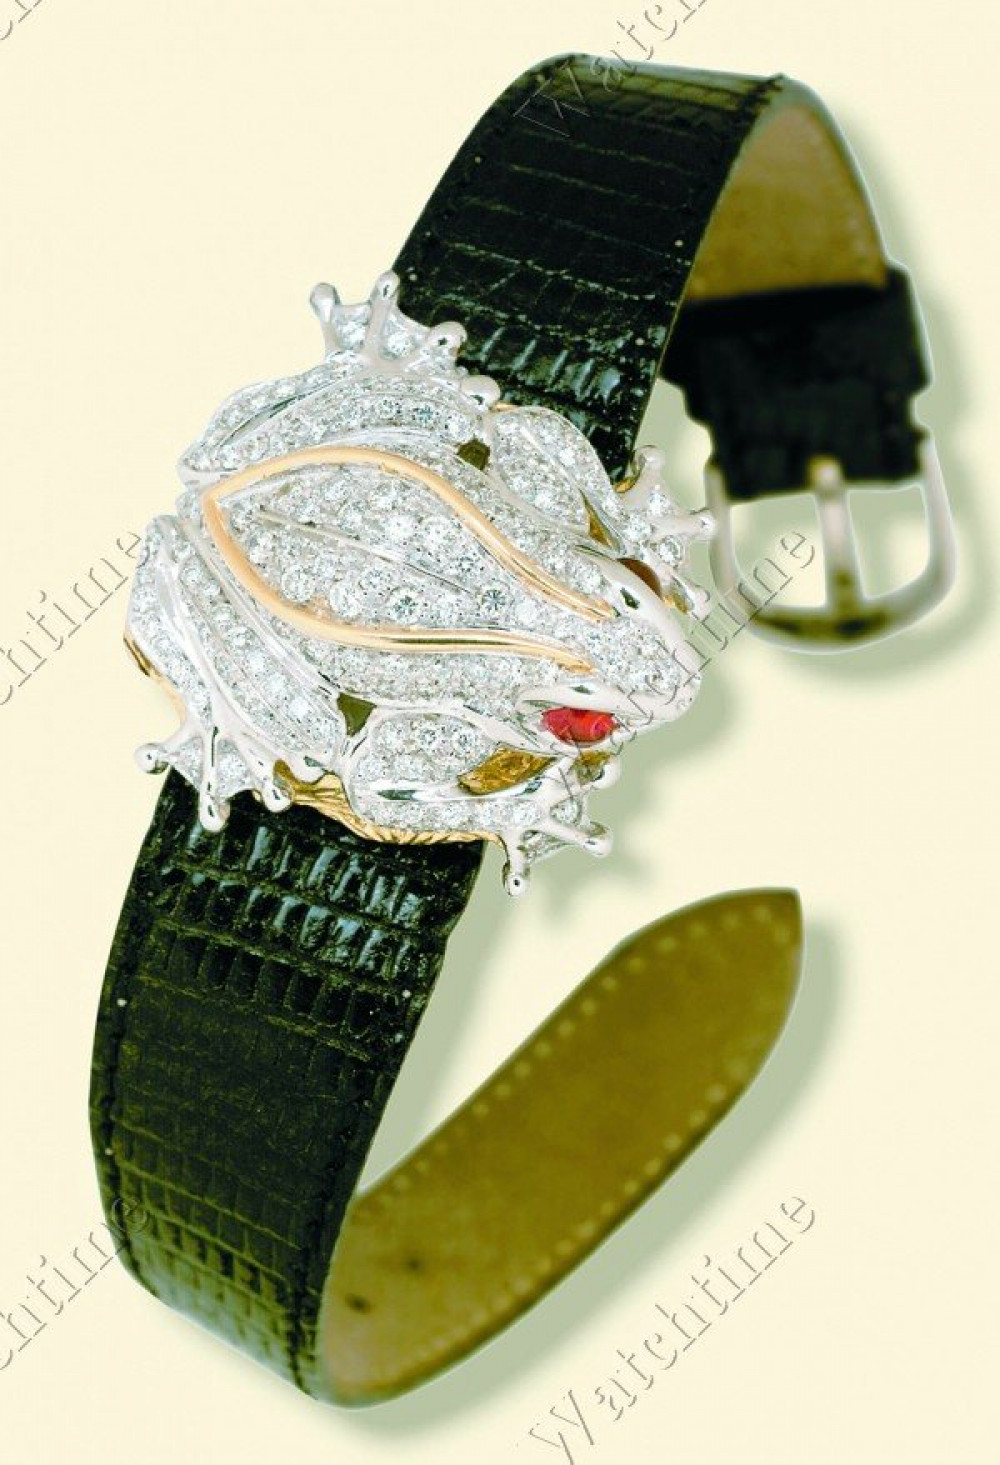 Zegarek firmy Zanetti, model Rana Scrigno